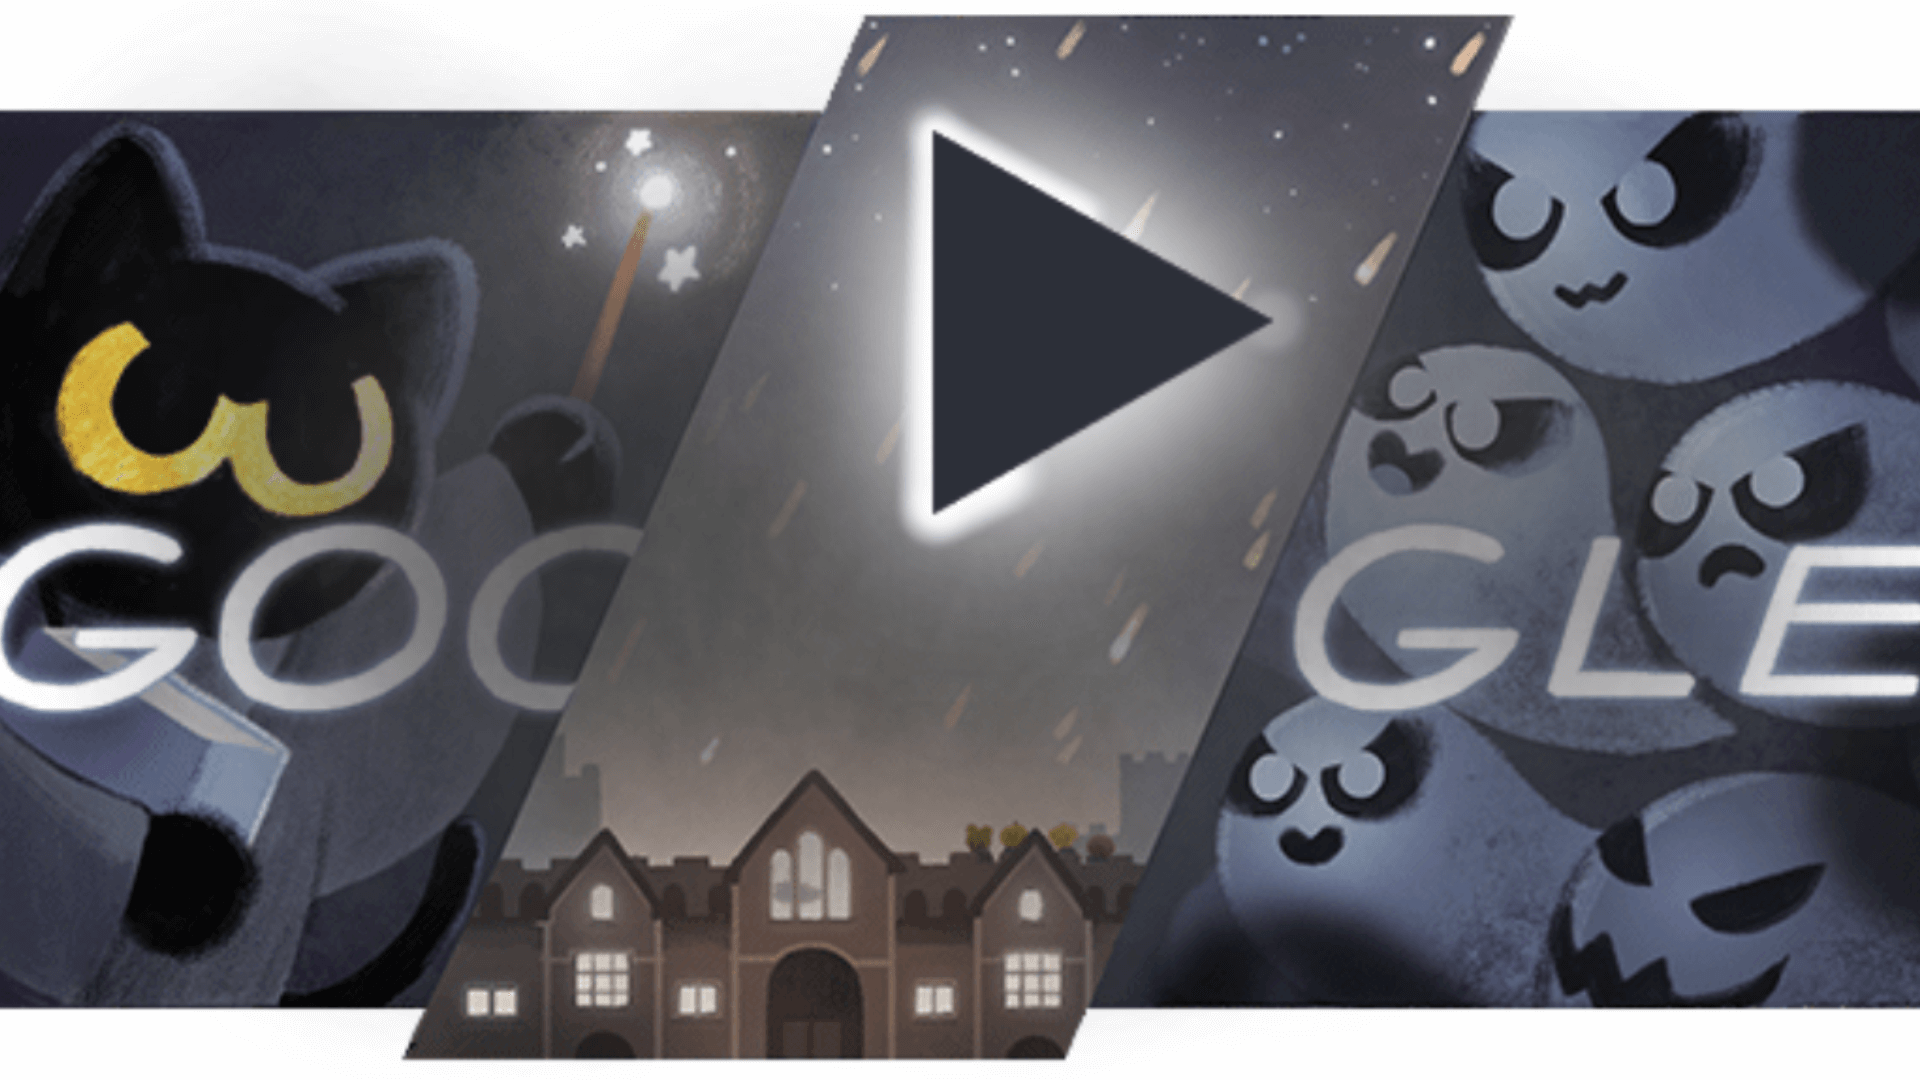 Crazy Google Logo - Halloween Google Doodle treats searchers to Magic Cat Academy game ...